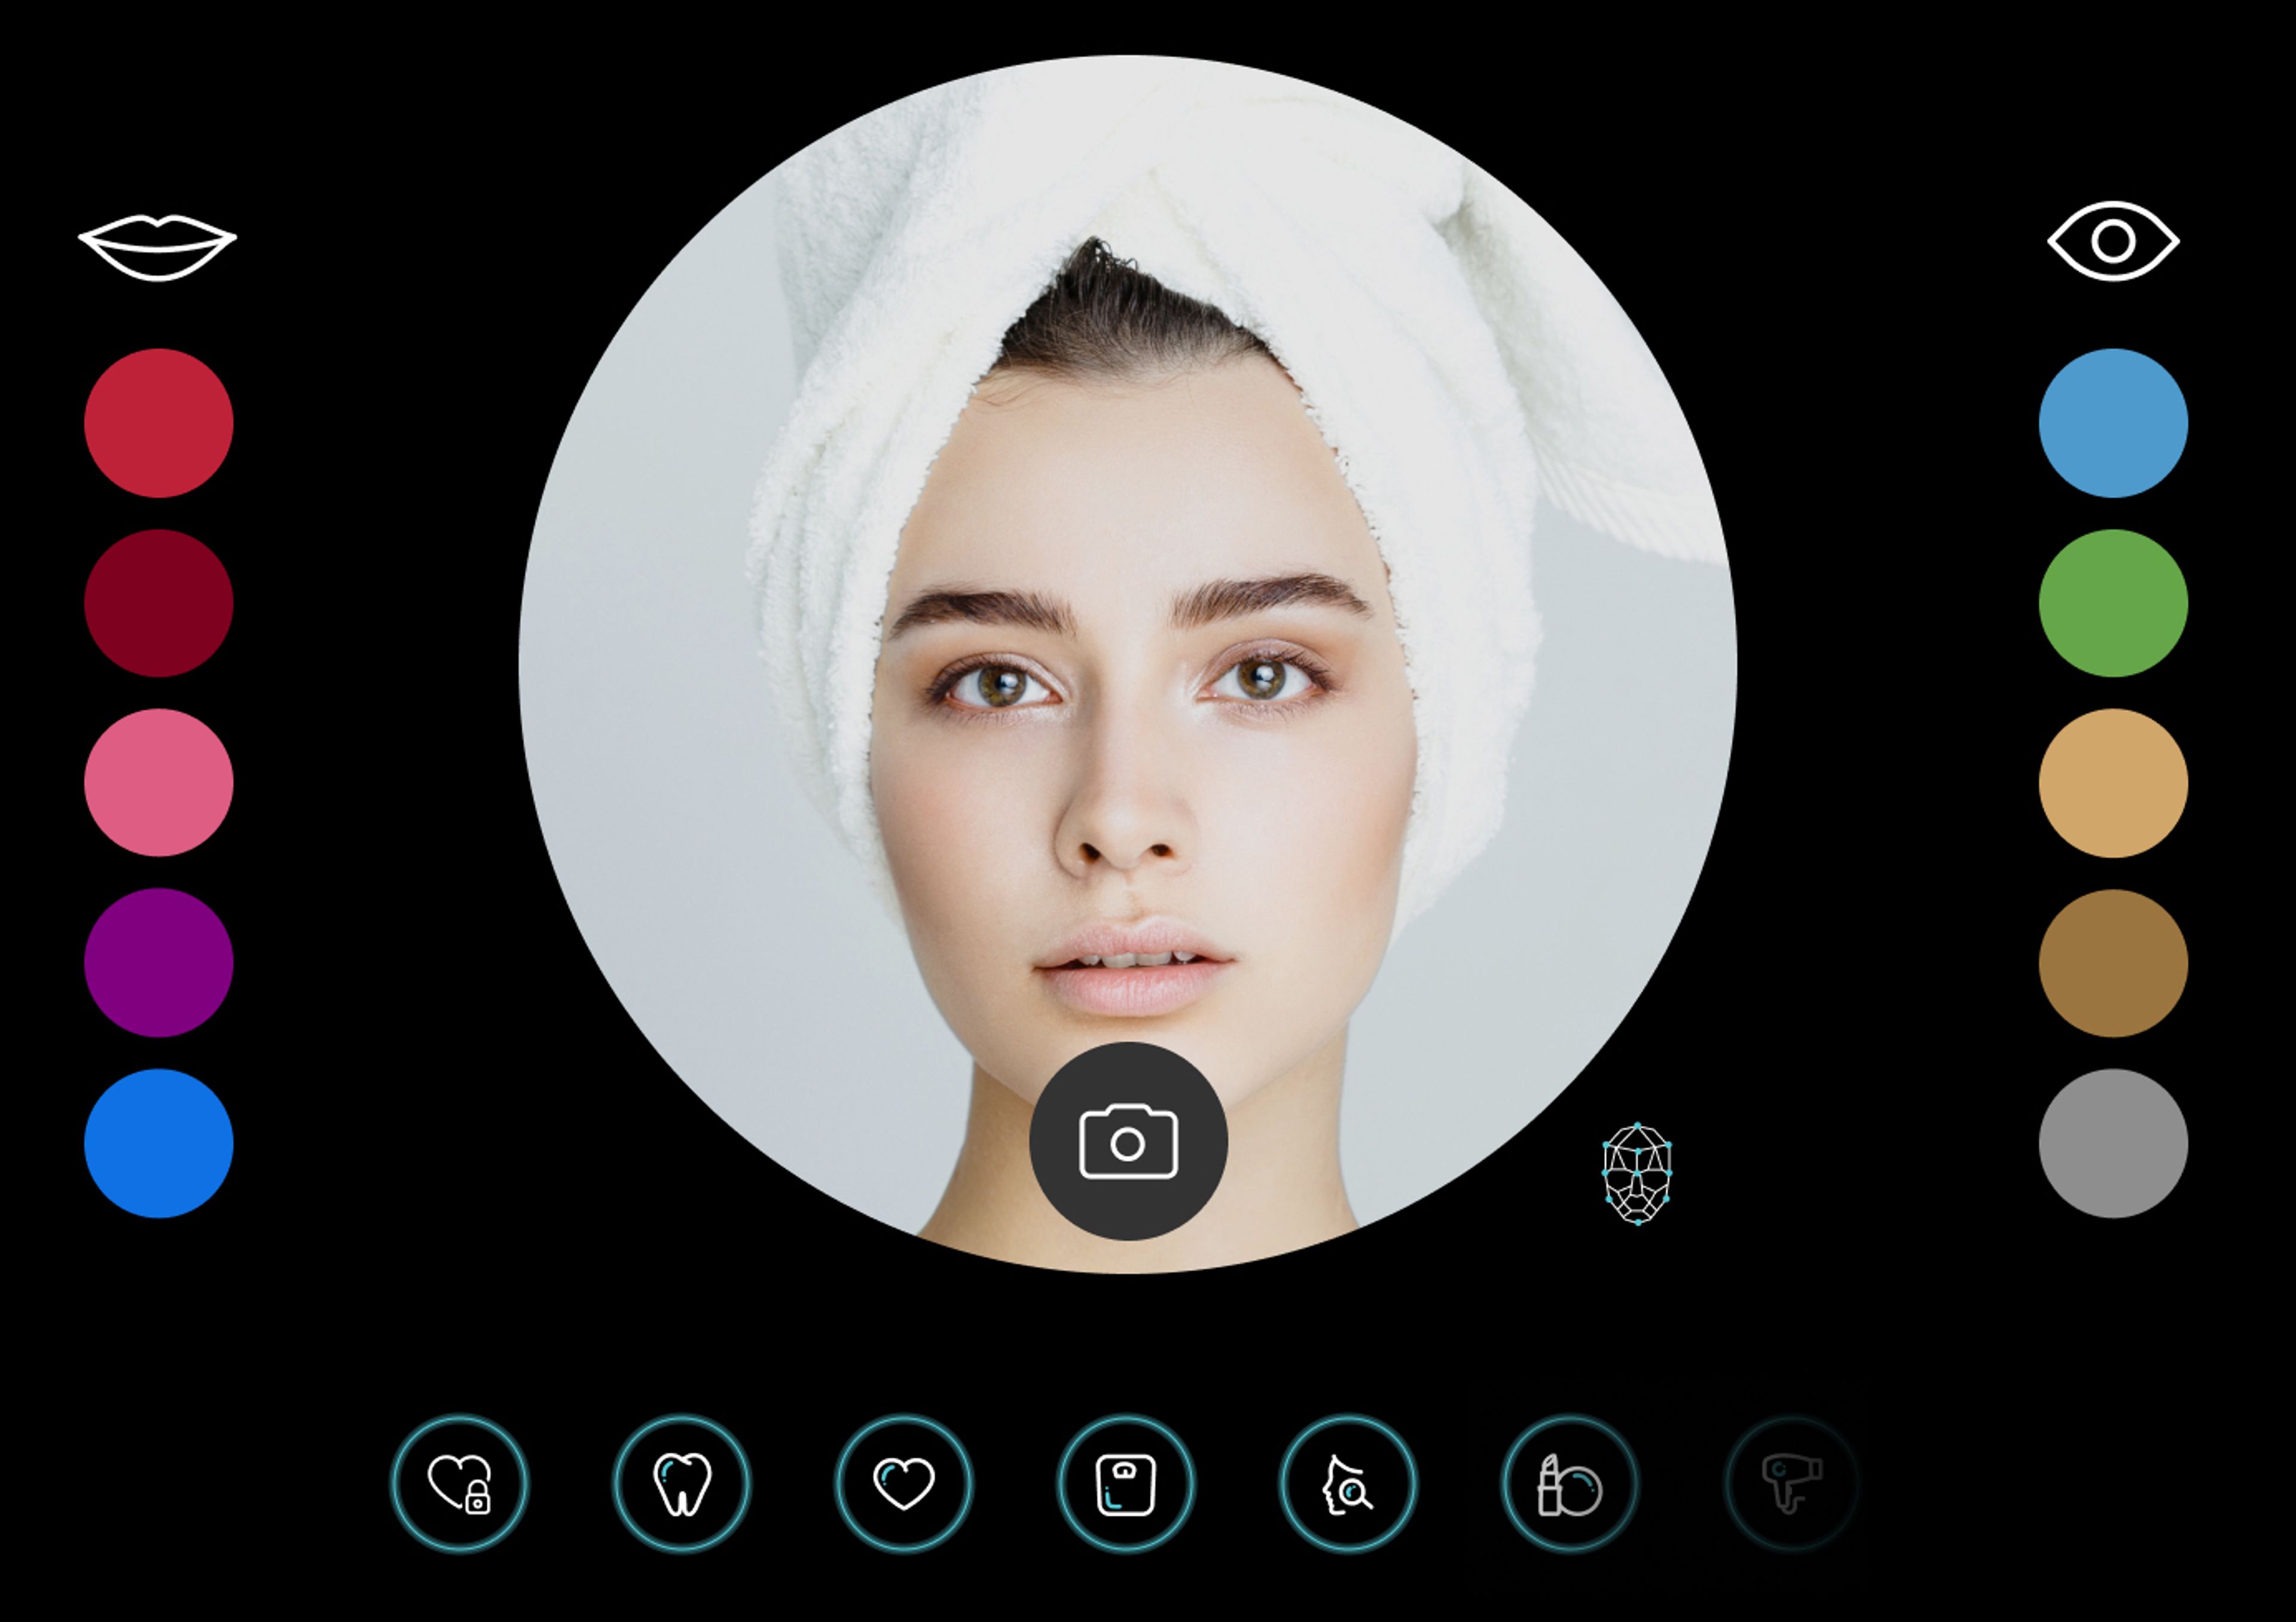 Smart mirror AR makeup testing screen